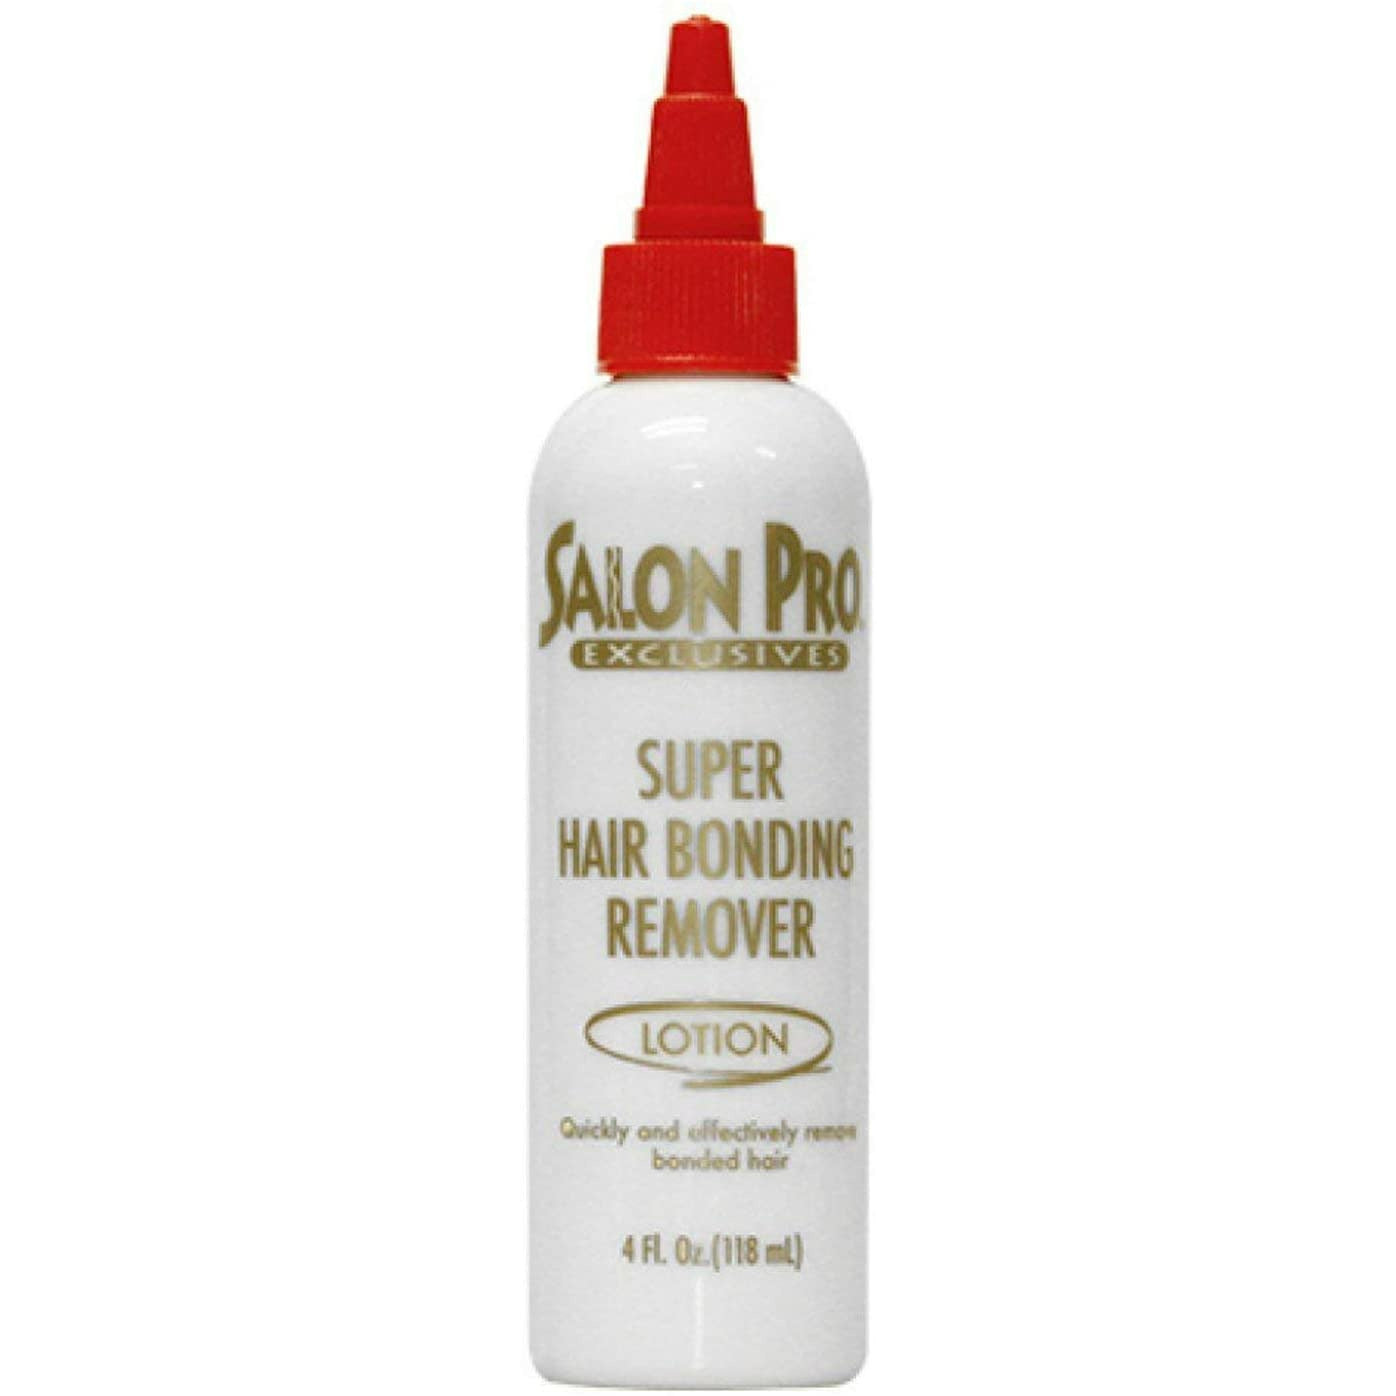 SALON PRO SUPER BONDING REMOVER LOTION 4oz-Salon Pro Exclusives- Hive Beauty Supply